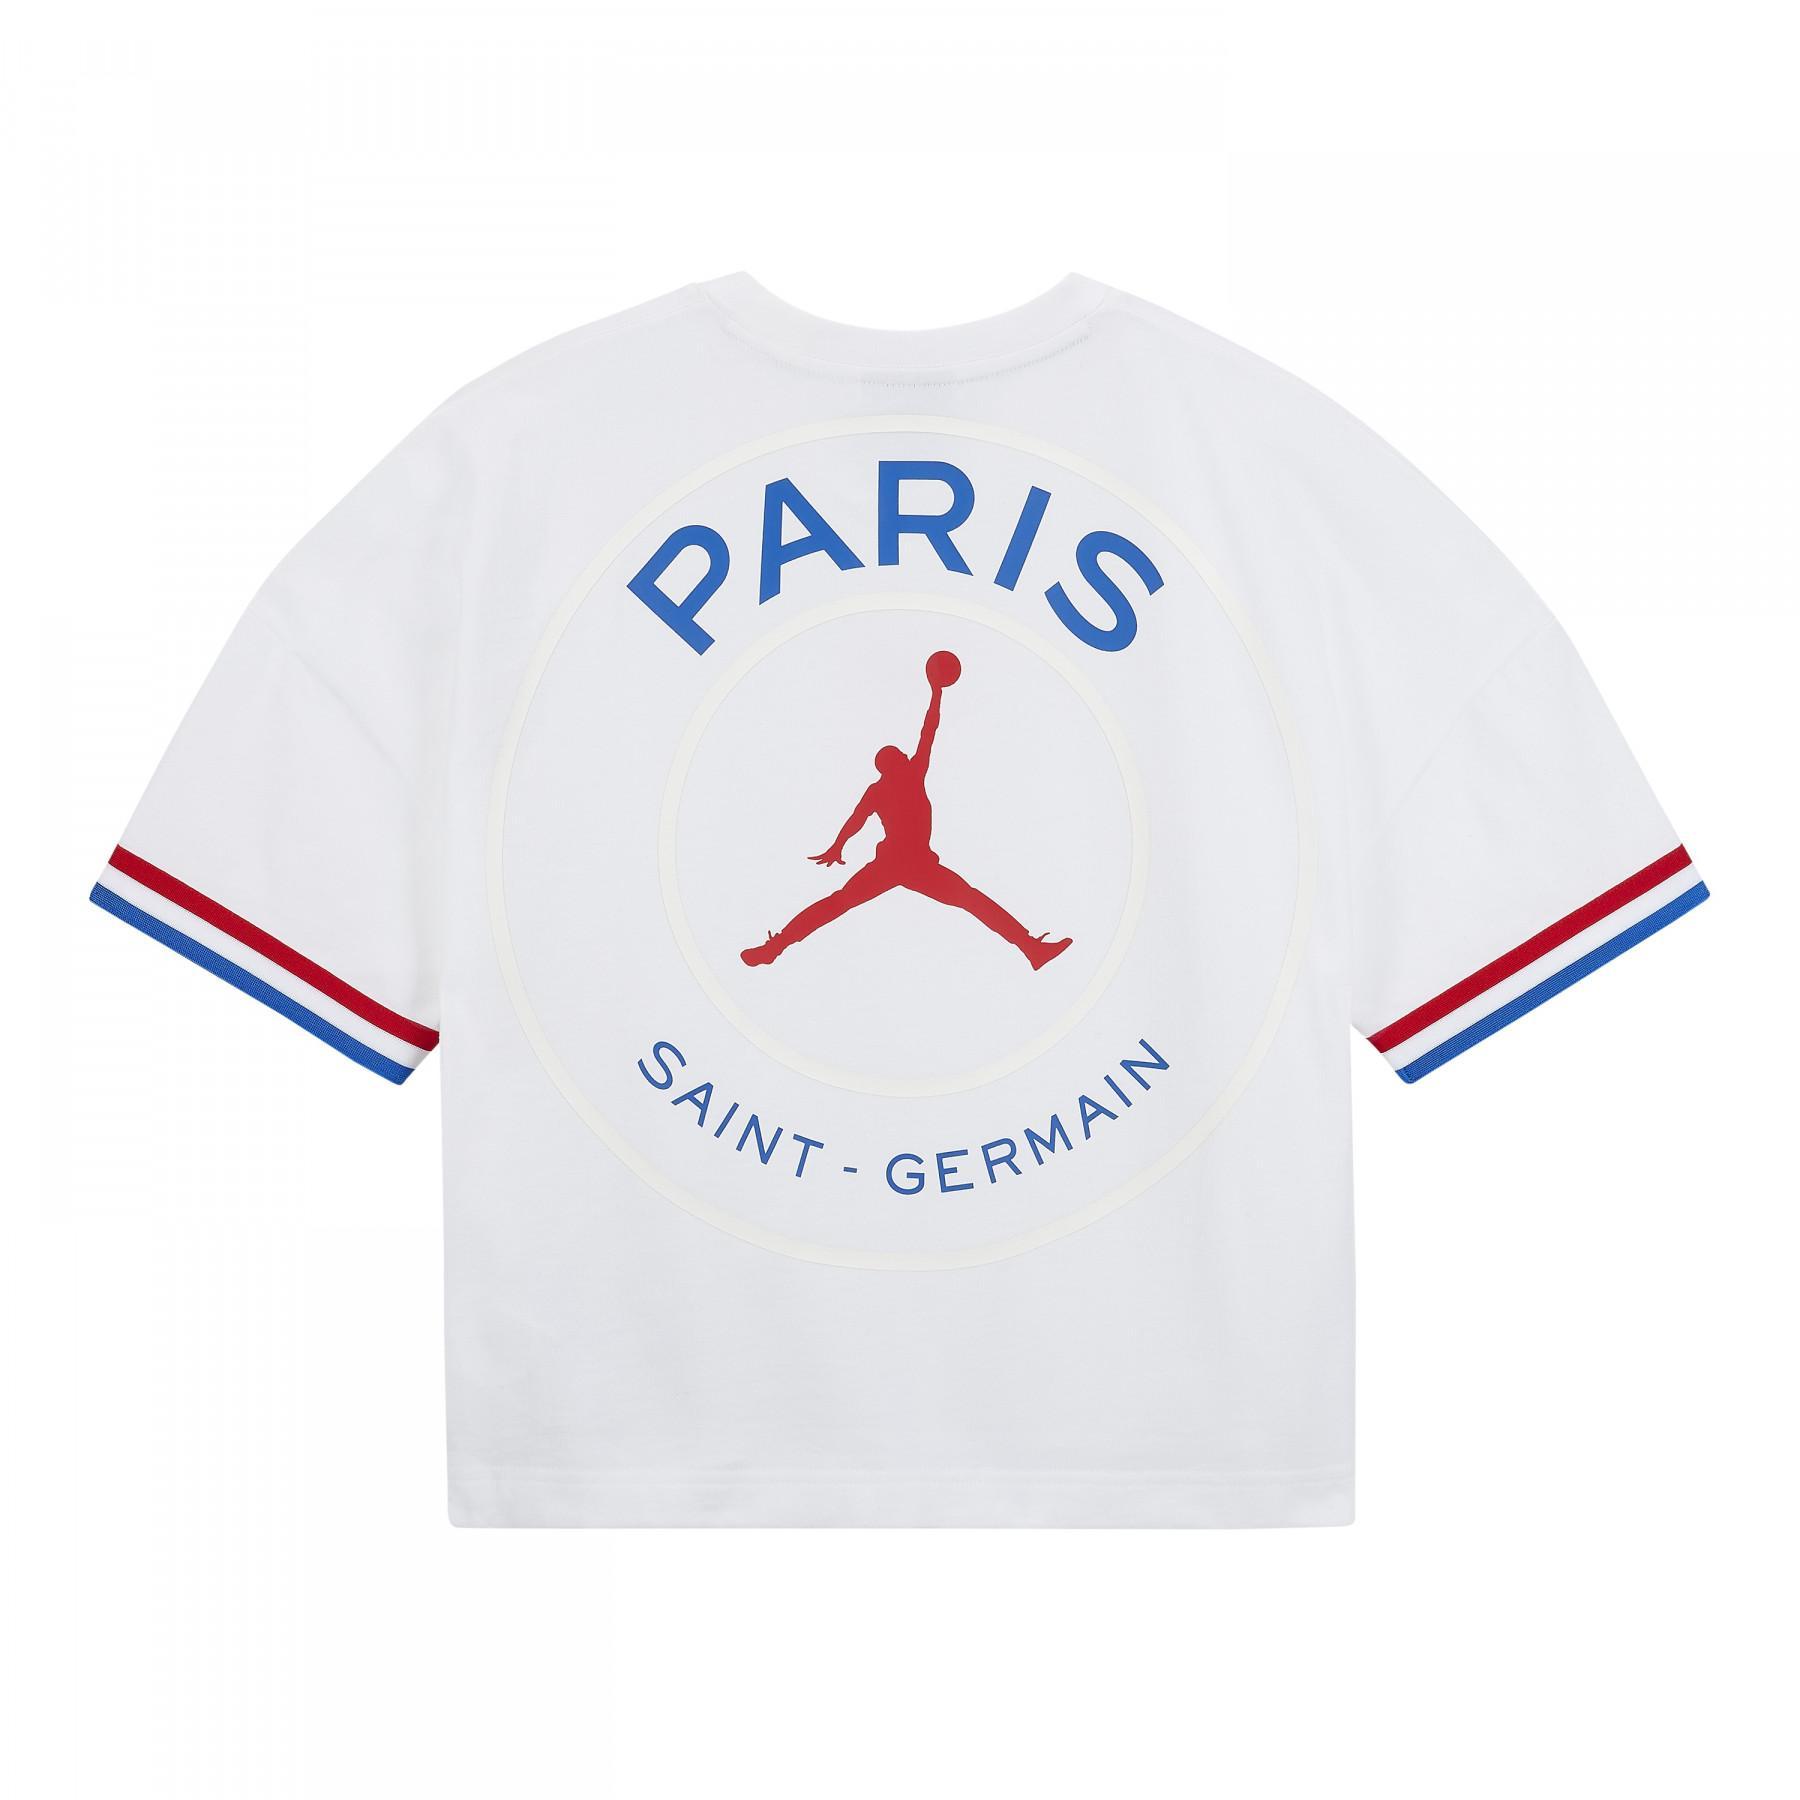 Camiseta de mujer PSG x Jordan Streetwear